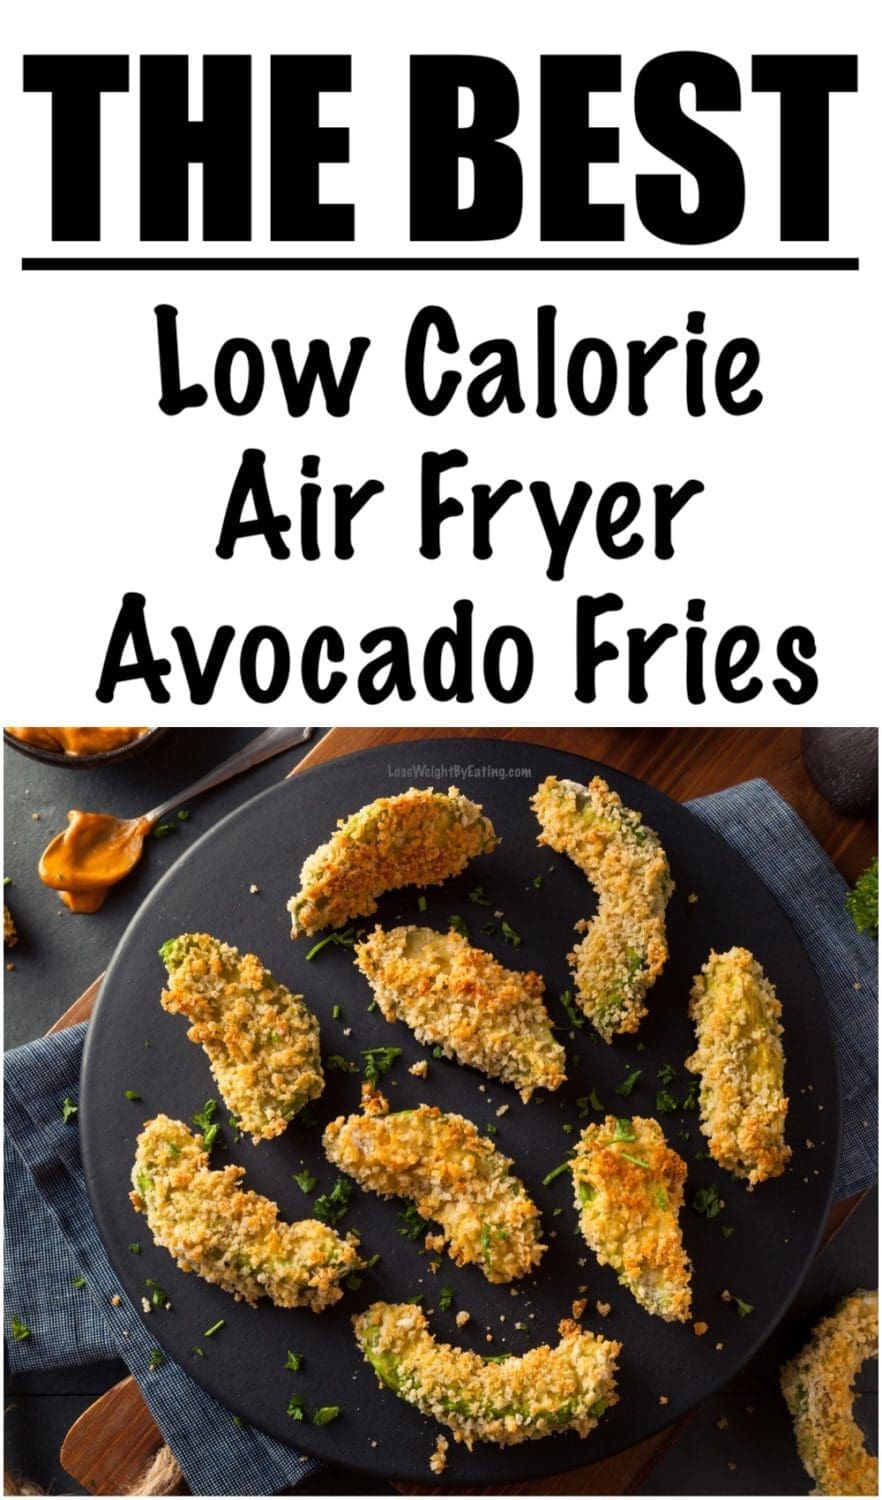 Healthy Air Fryer Recipe for Avocado Fries